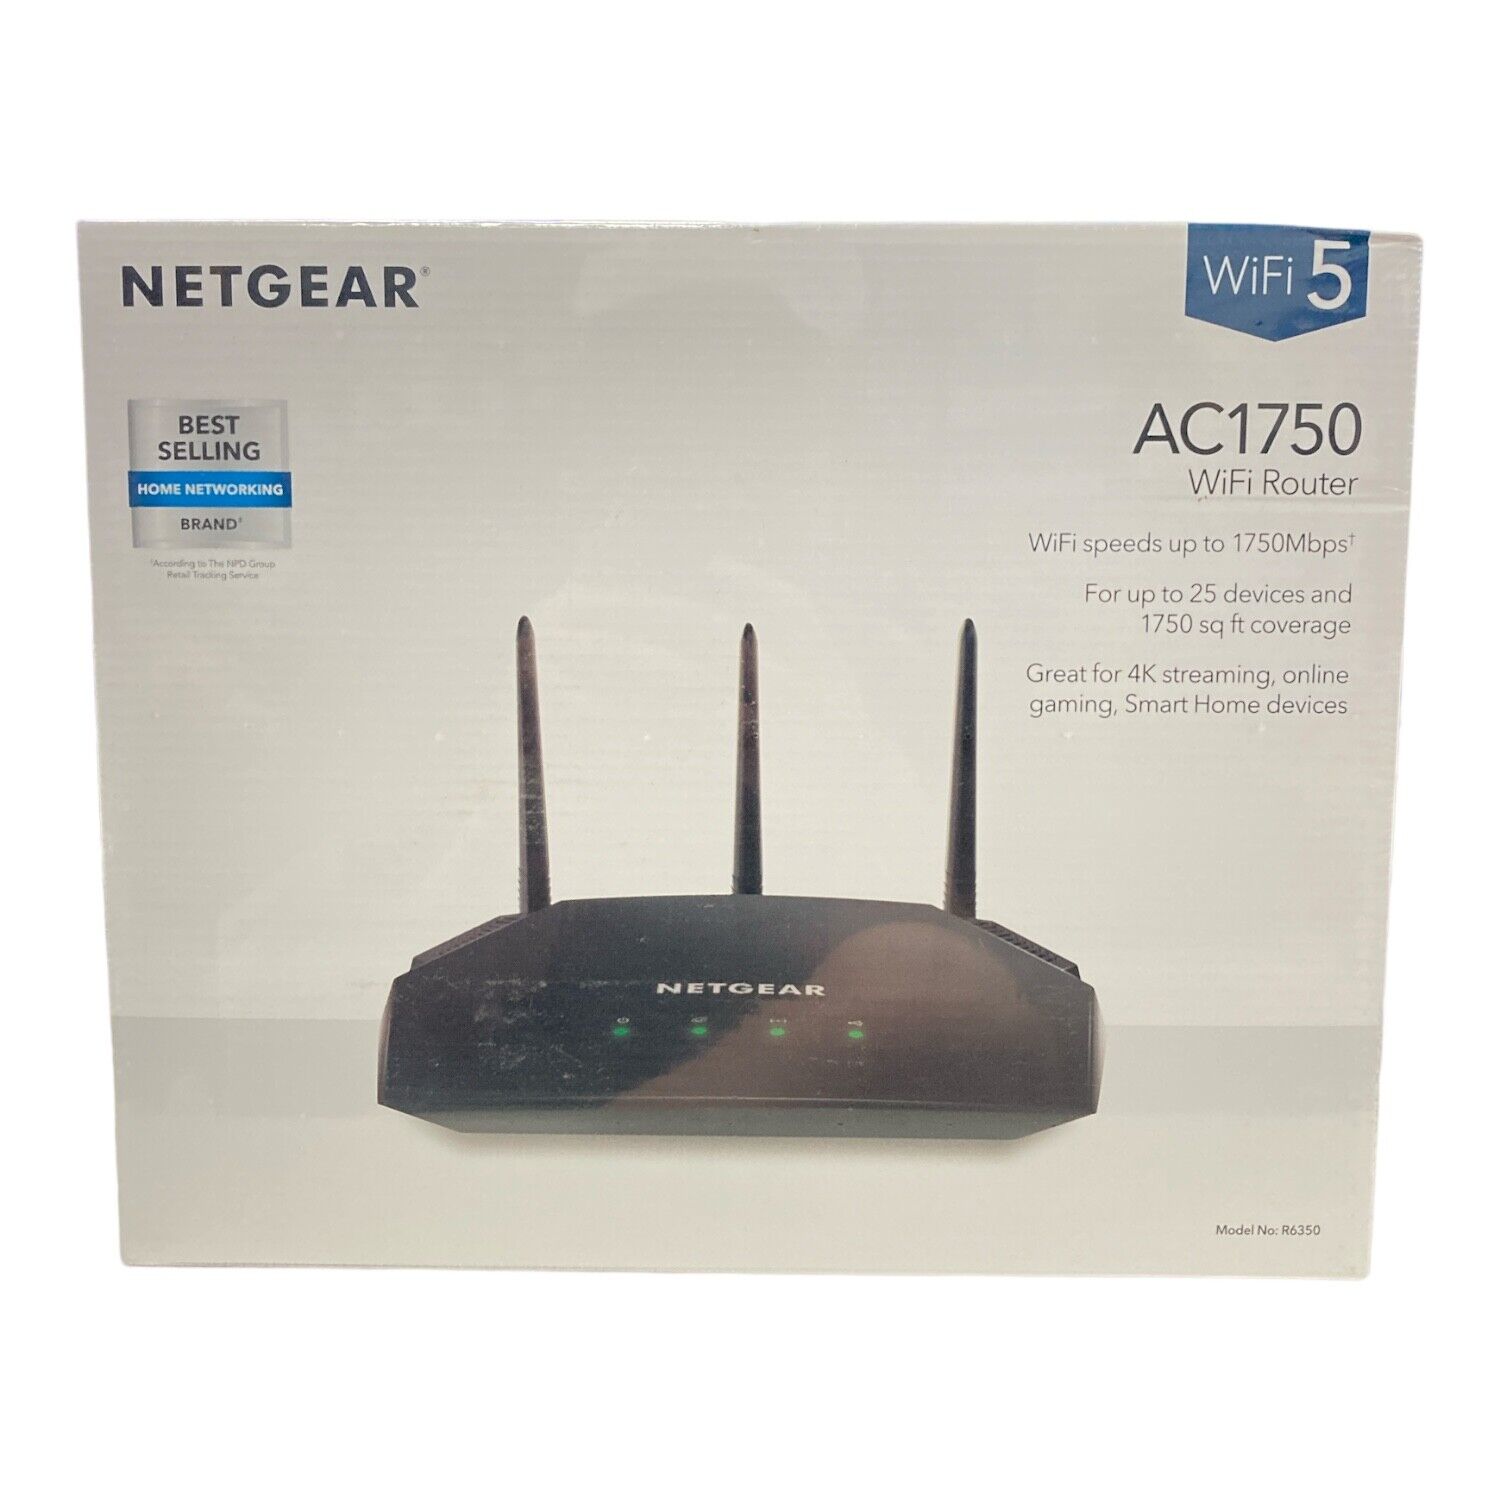 NETGEAR AC1750 Smart WiFi Router - WiFi 5 Dual Band Gigabit (R6350)